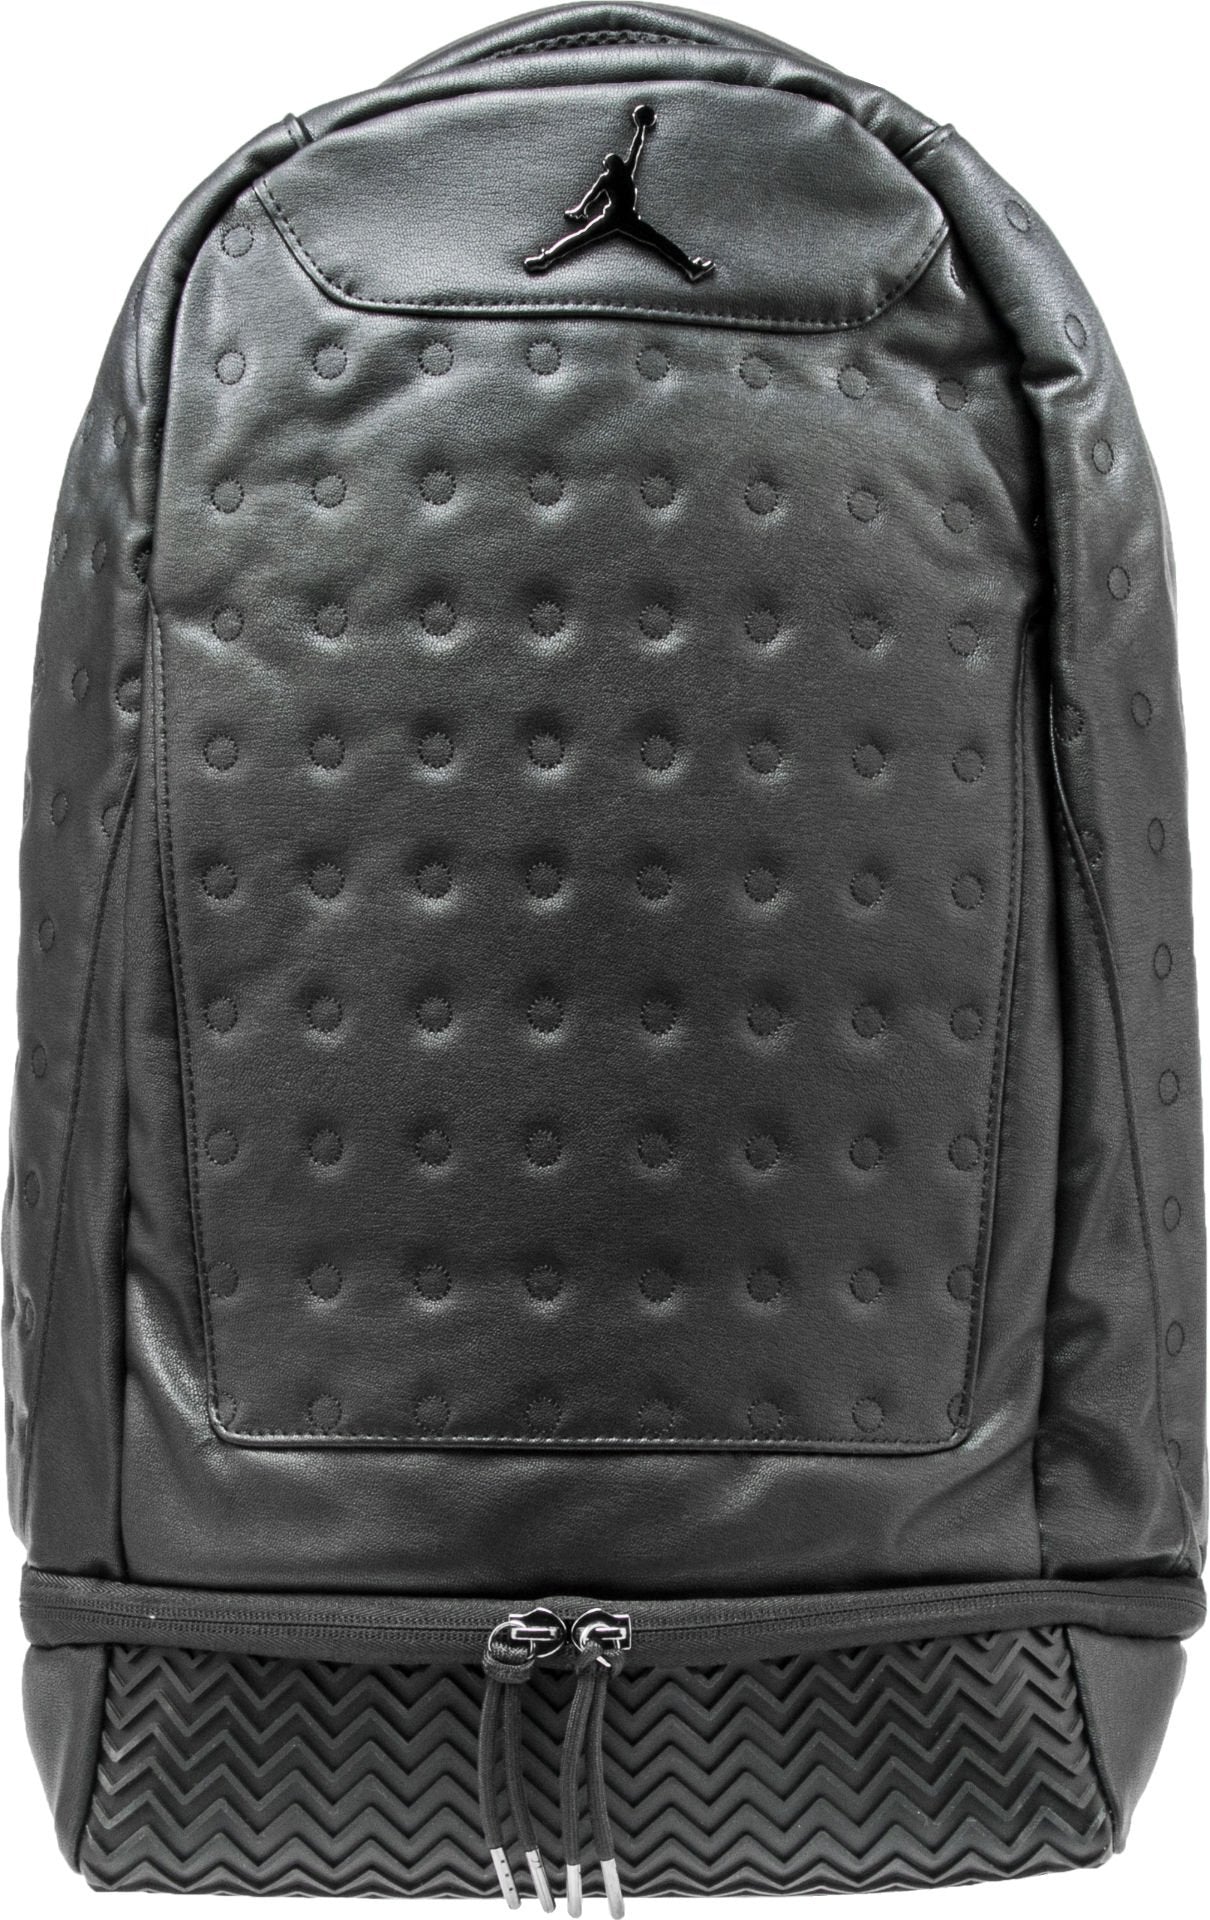 Nike Air Jordan Retro 13 Backpack - Black 9a1898 023 